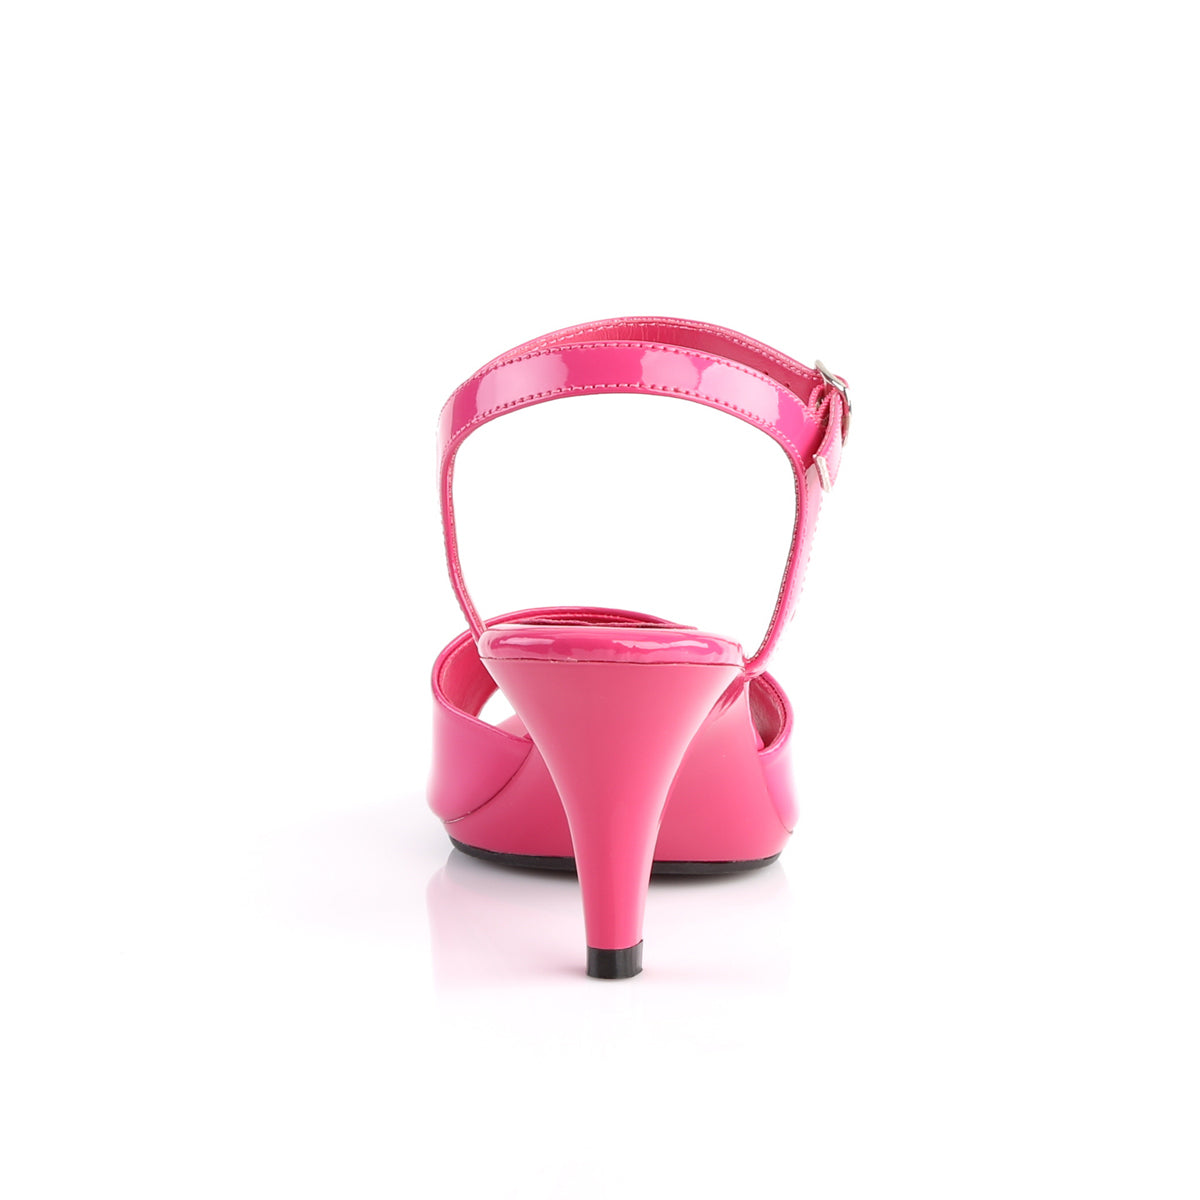 Fabulicious Sandalias para mujer BELLE-309 PAT rosa caliente / rosa caliente